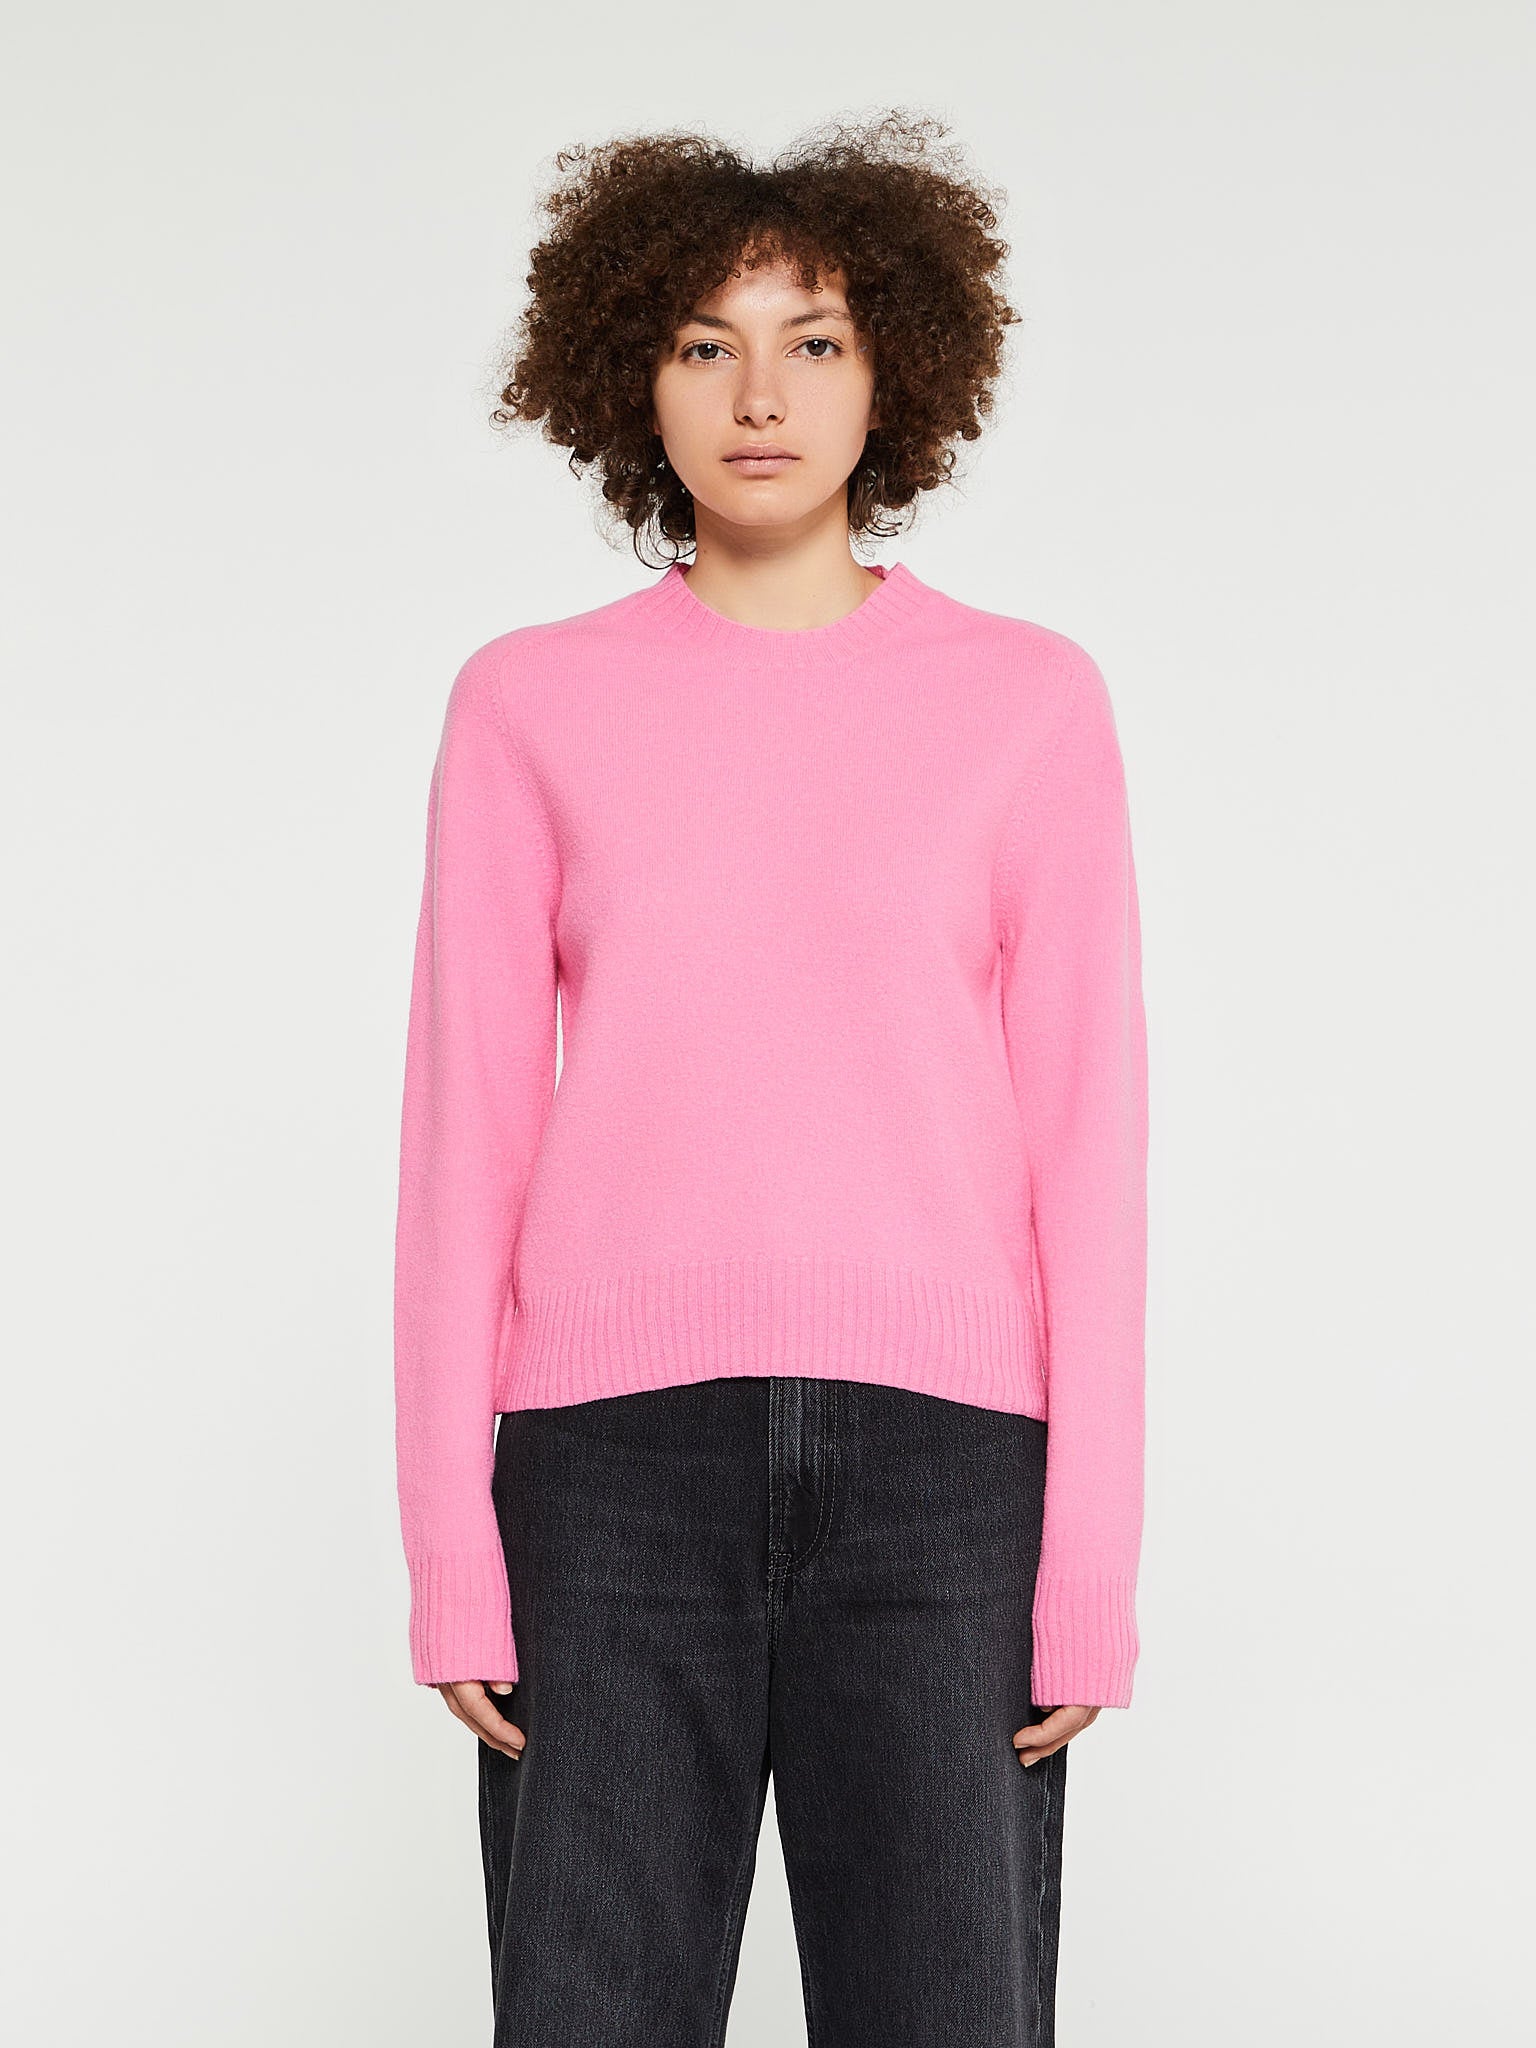 Jil Sander - Crewneck Sweater in Electric Pink